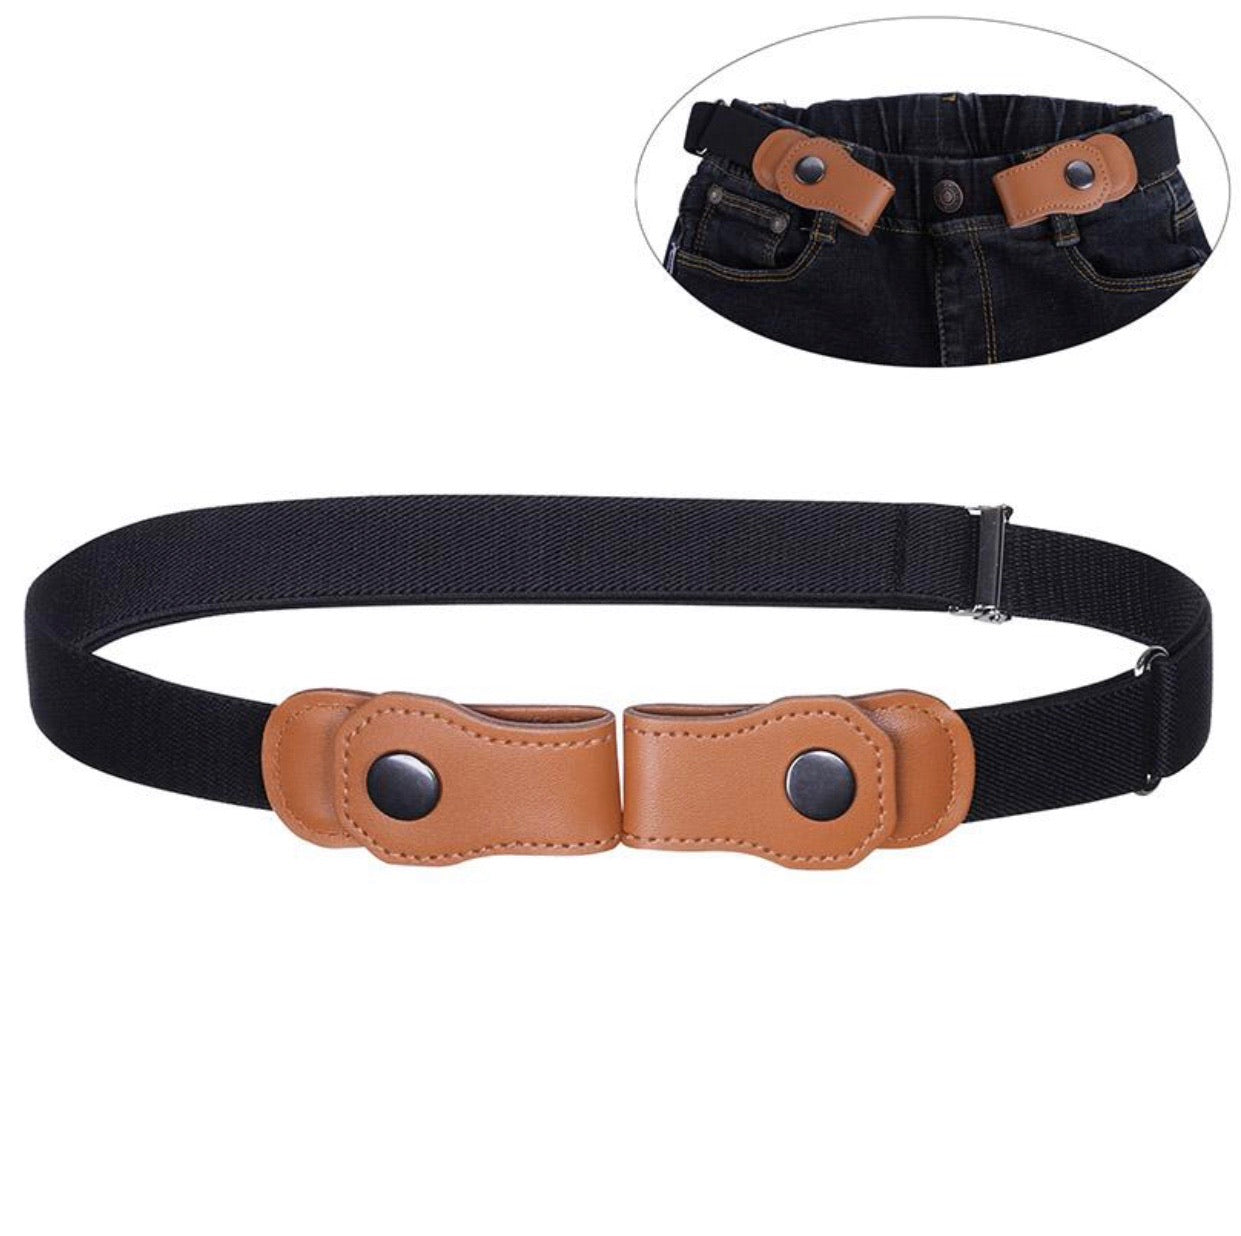 black/tan buckle less belt